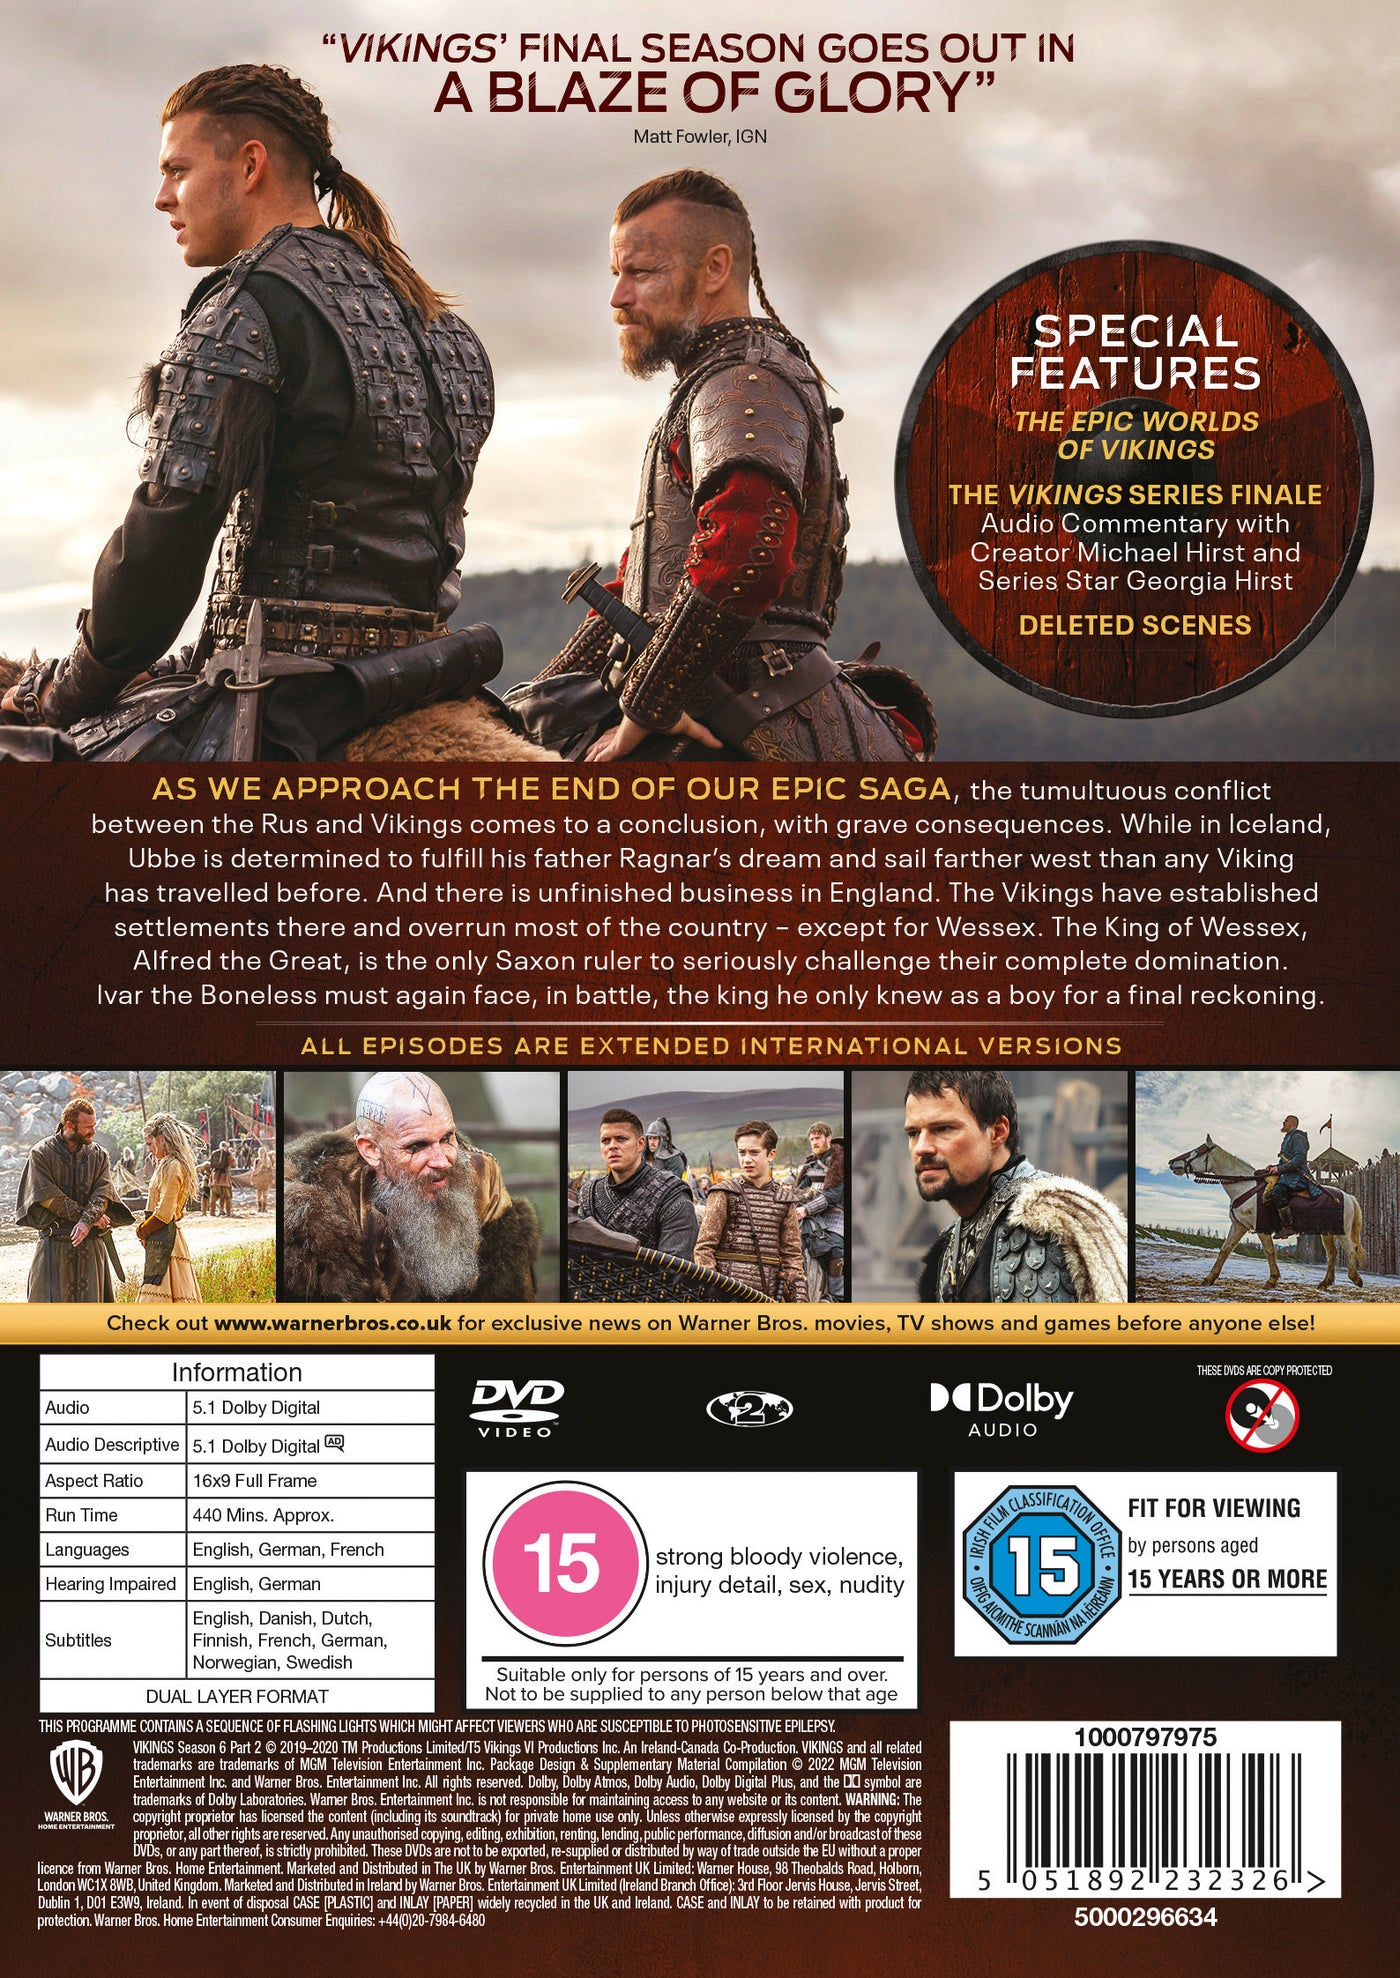 Vikings: Season 6 Volume 2 (DVD) (2020)